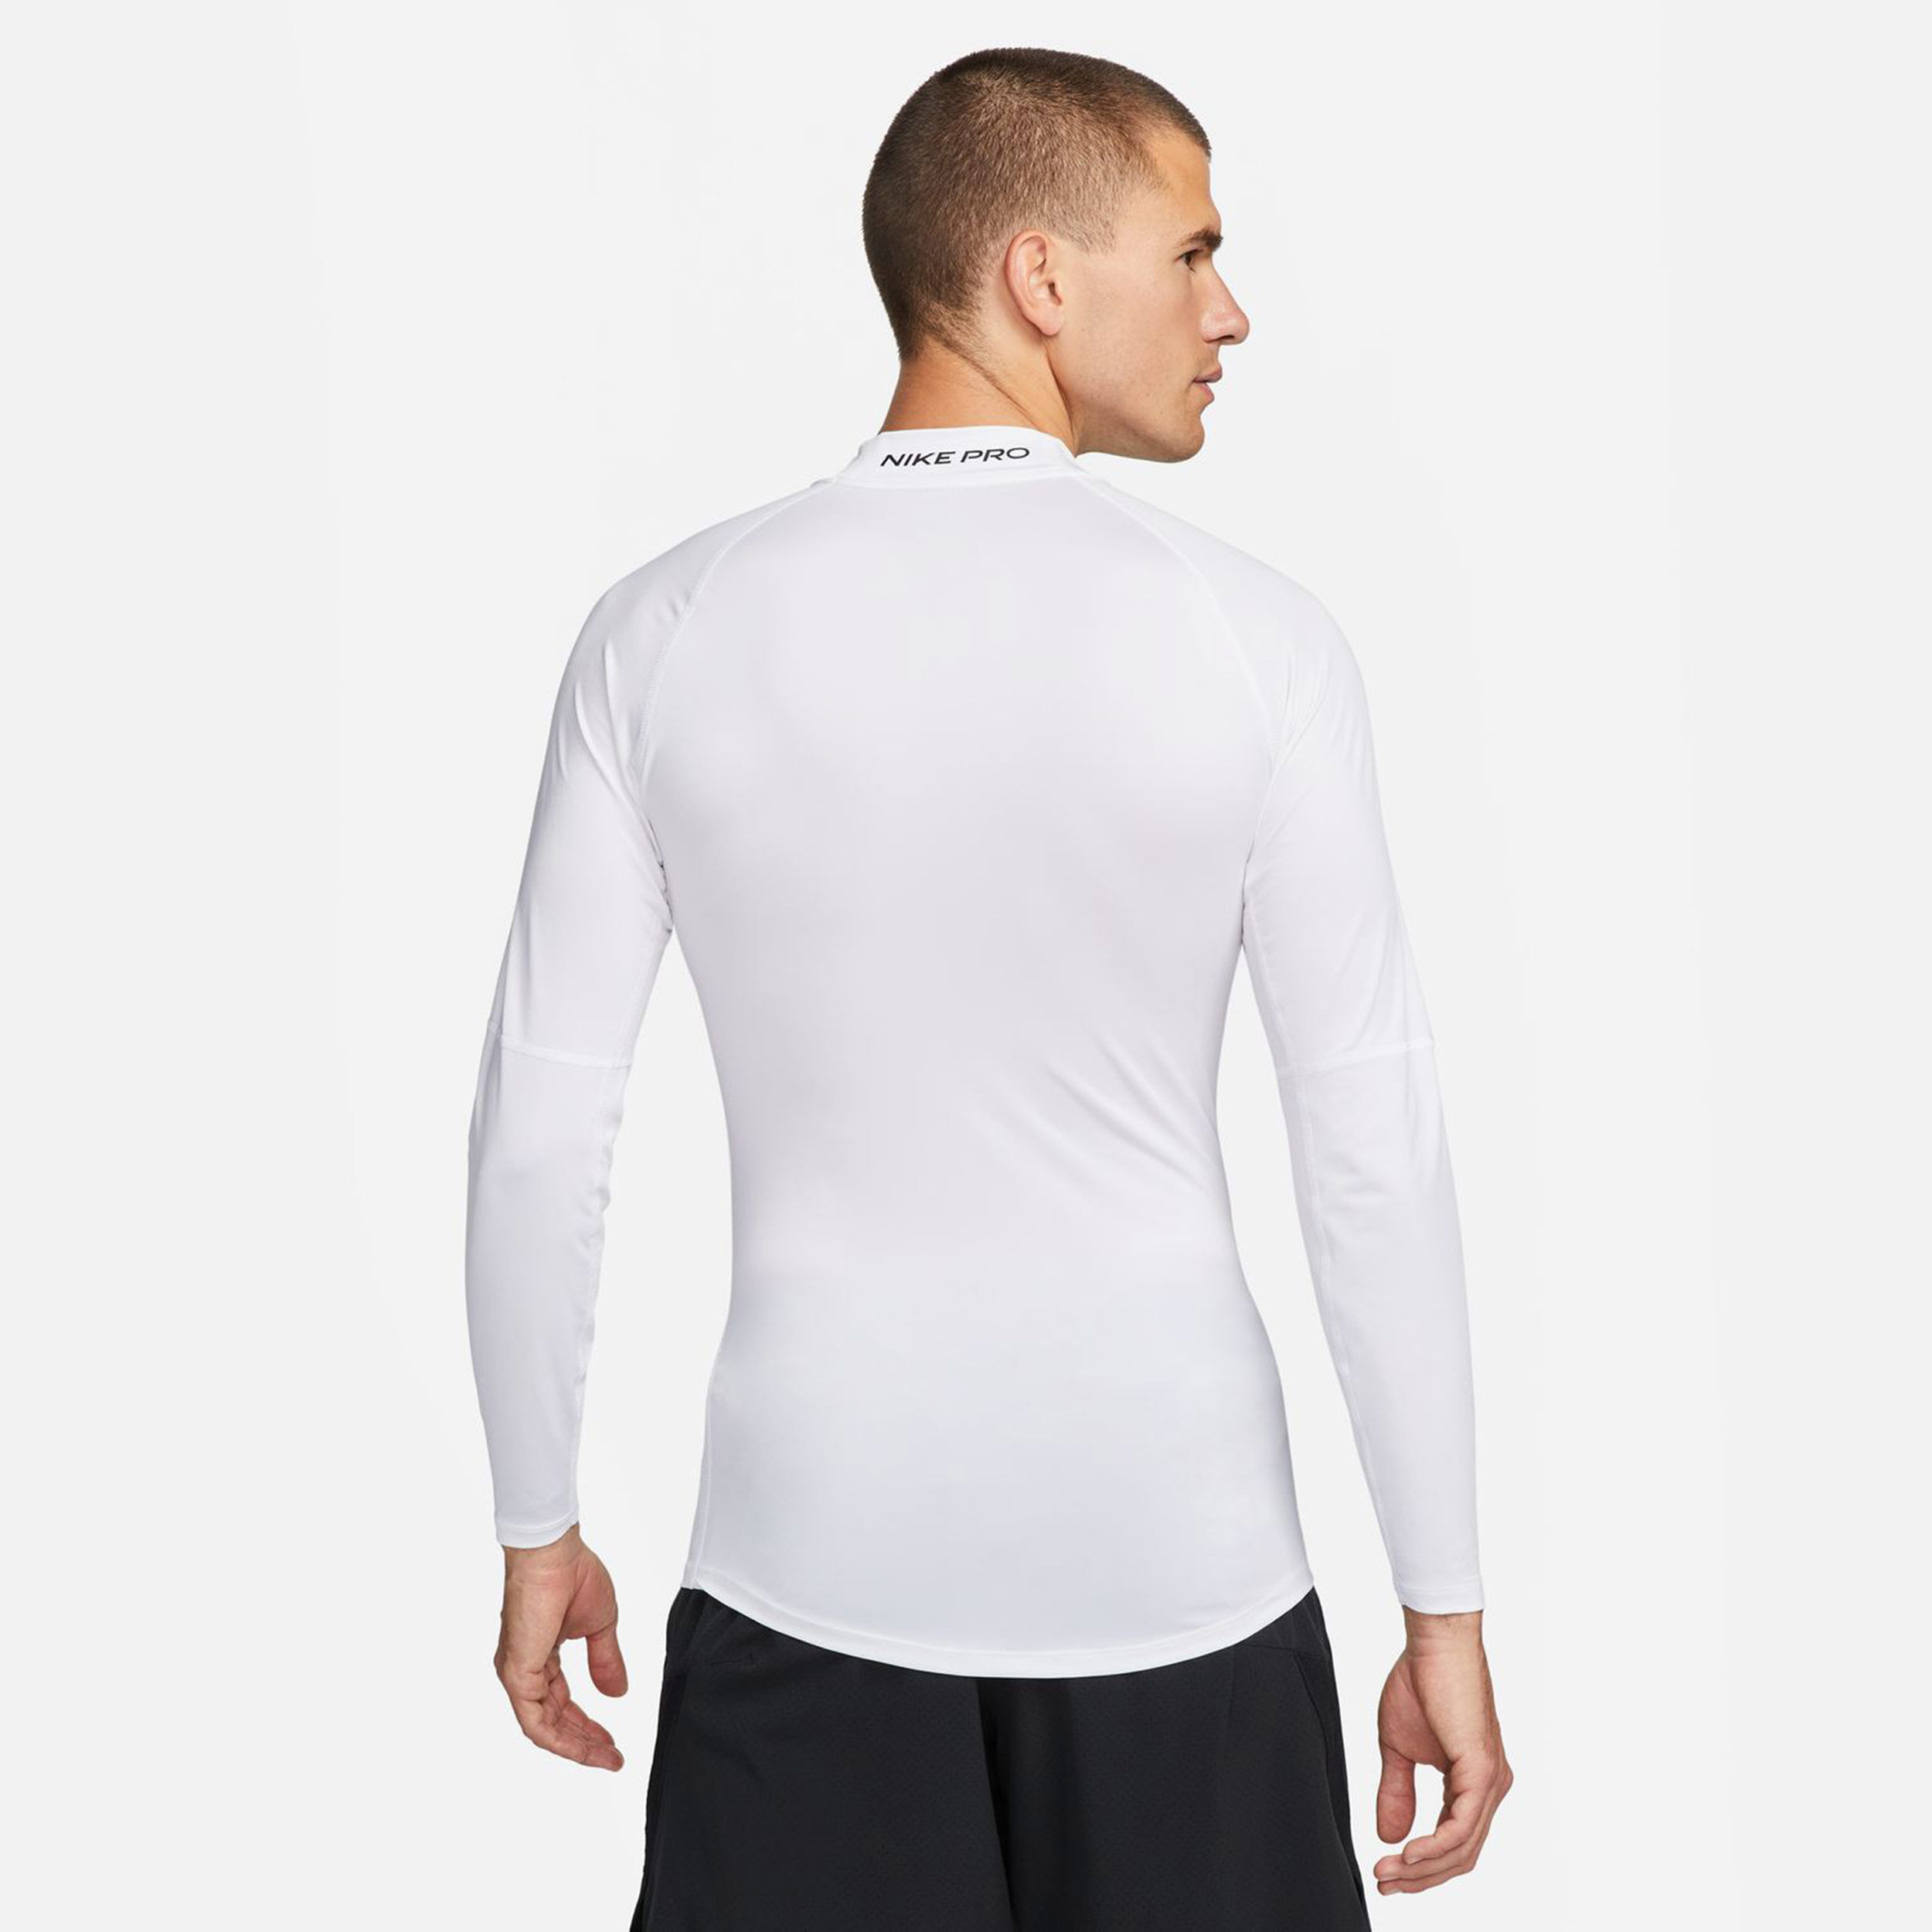 Buy Nike Dri-Fit Long Sleeve Men White online | Tennis Point COM